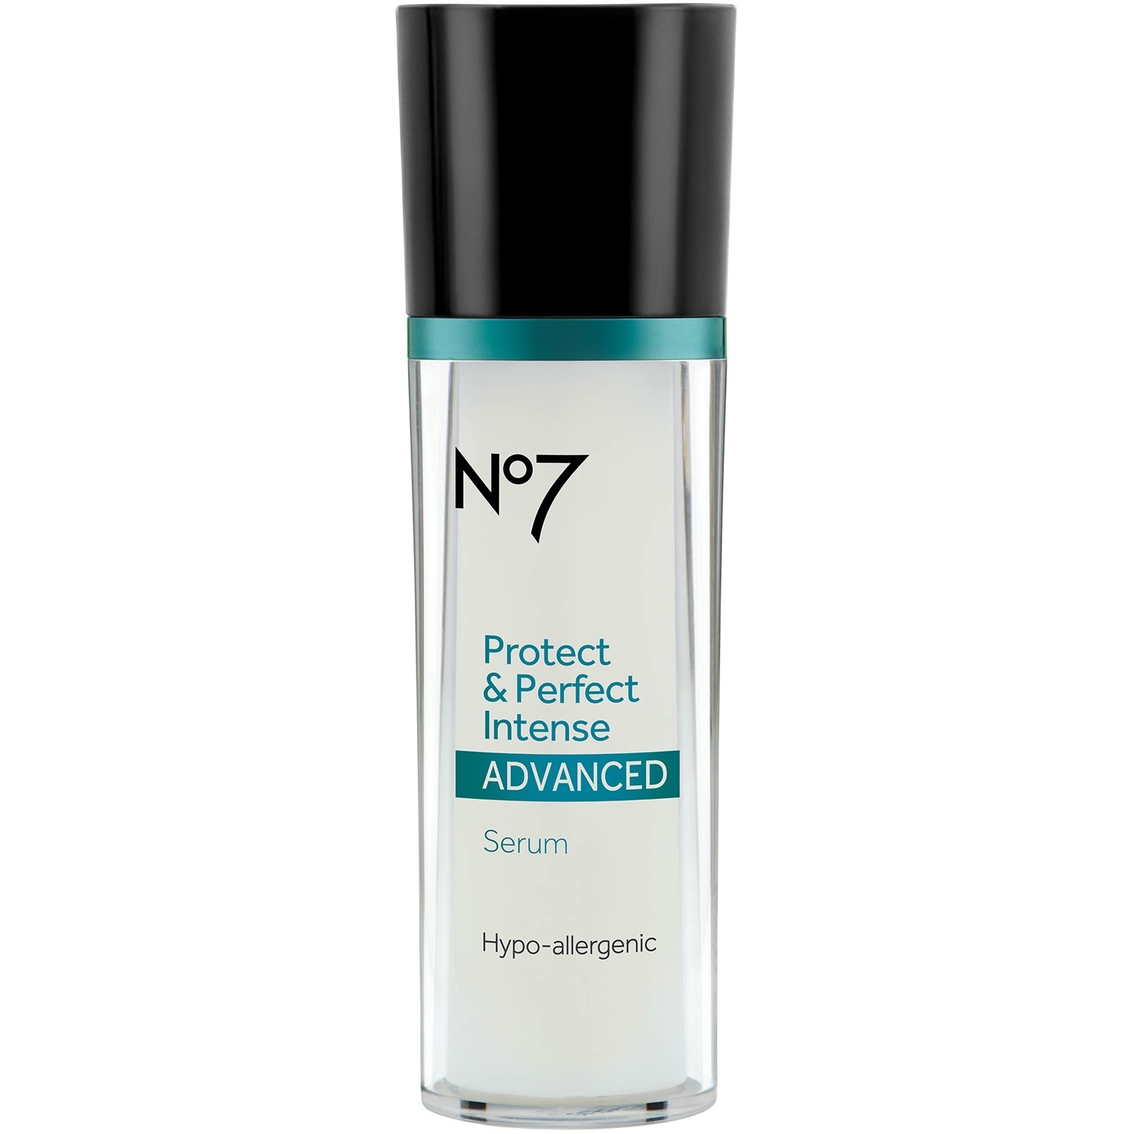 No7 Protect And Perfect Intense Advanced Serum | Serums ...